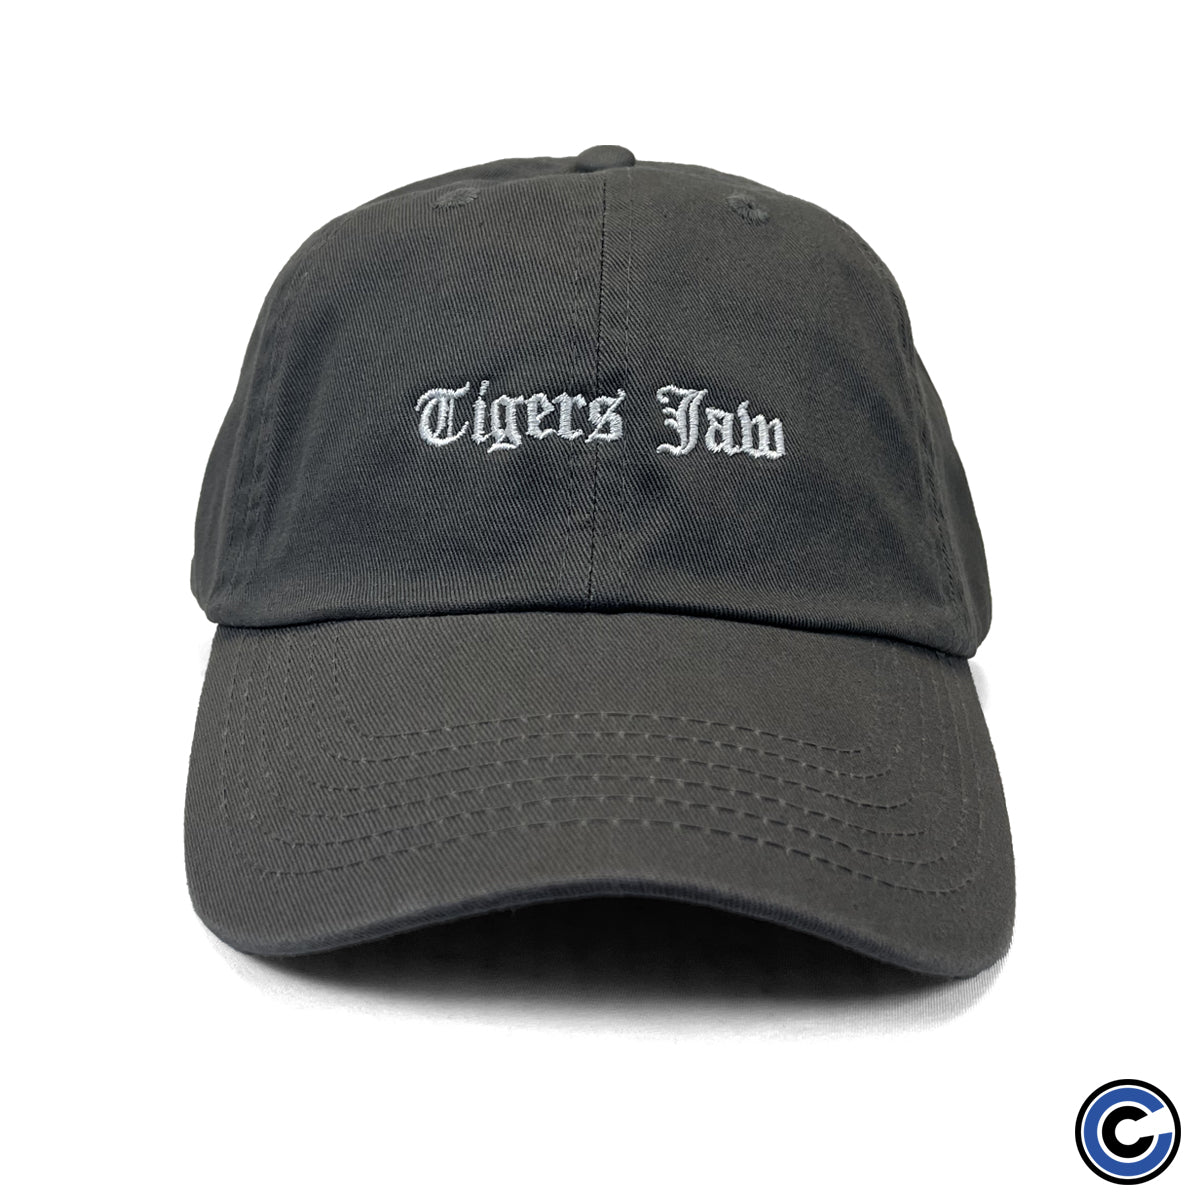 Tigers Jaw "Carousel" Hat